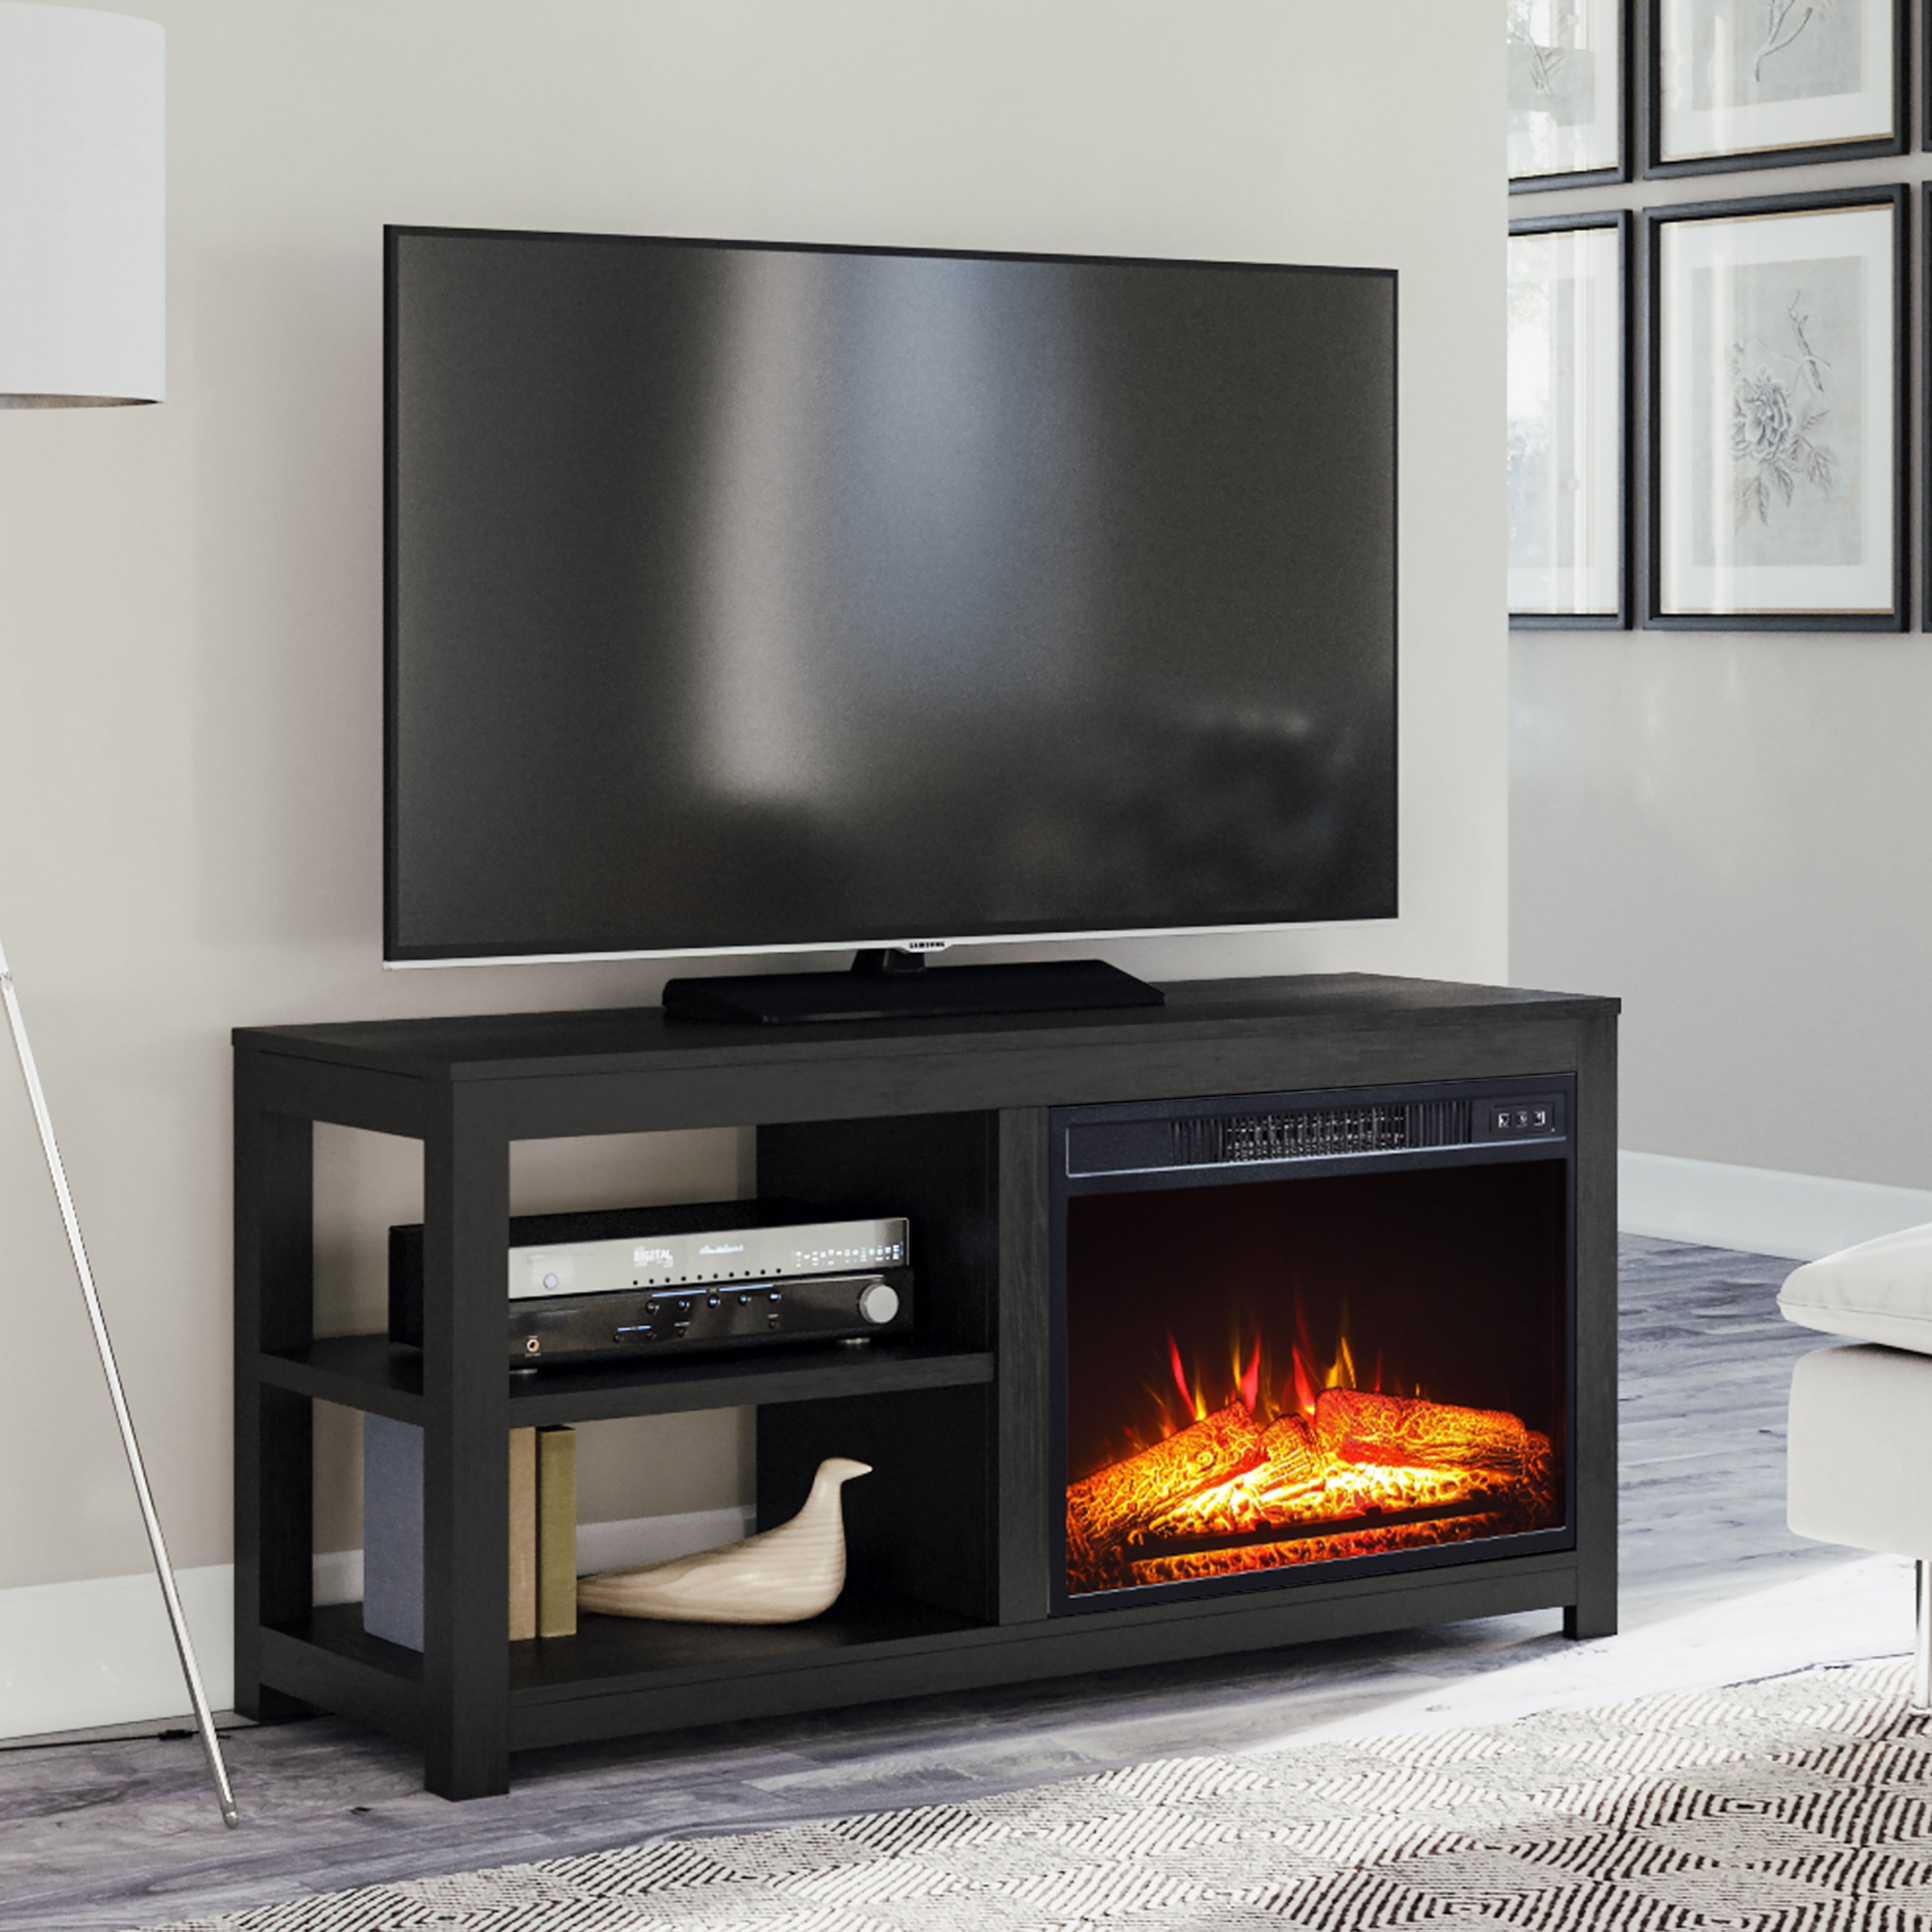 Mainstays 2-Shelf Media Fireplace TV Stand for Flat panel TVs up to 60", Black Oak Finish ...